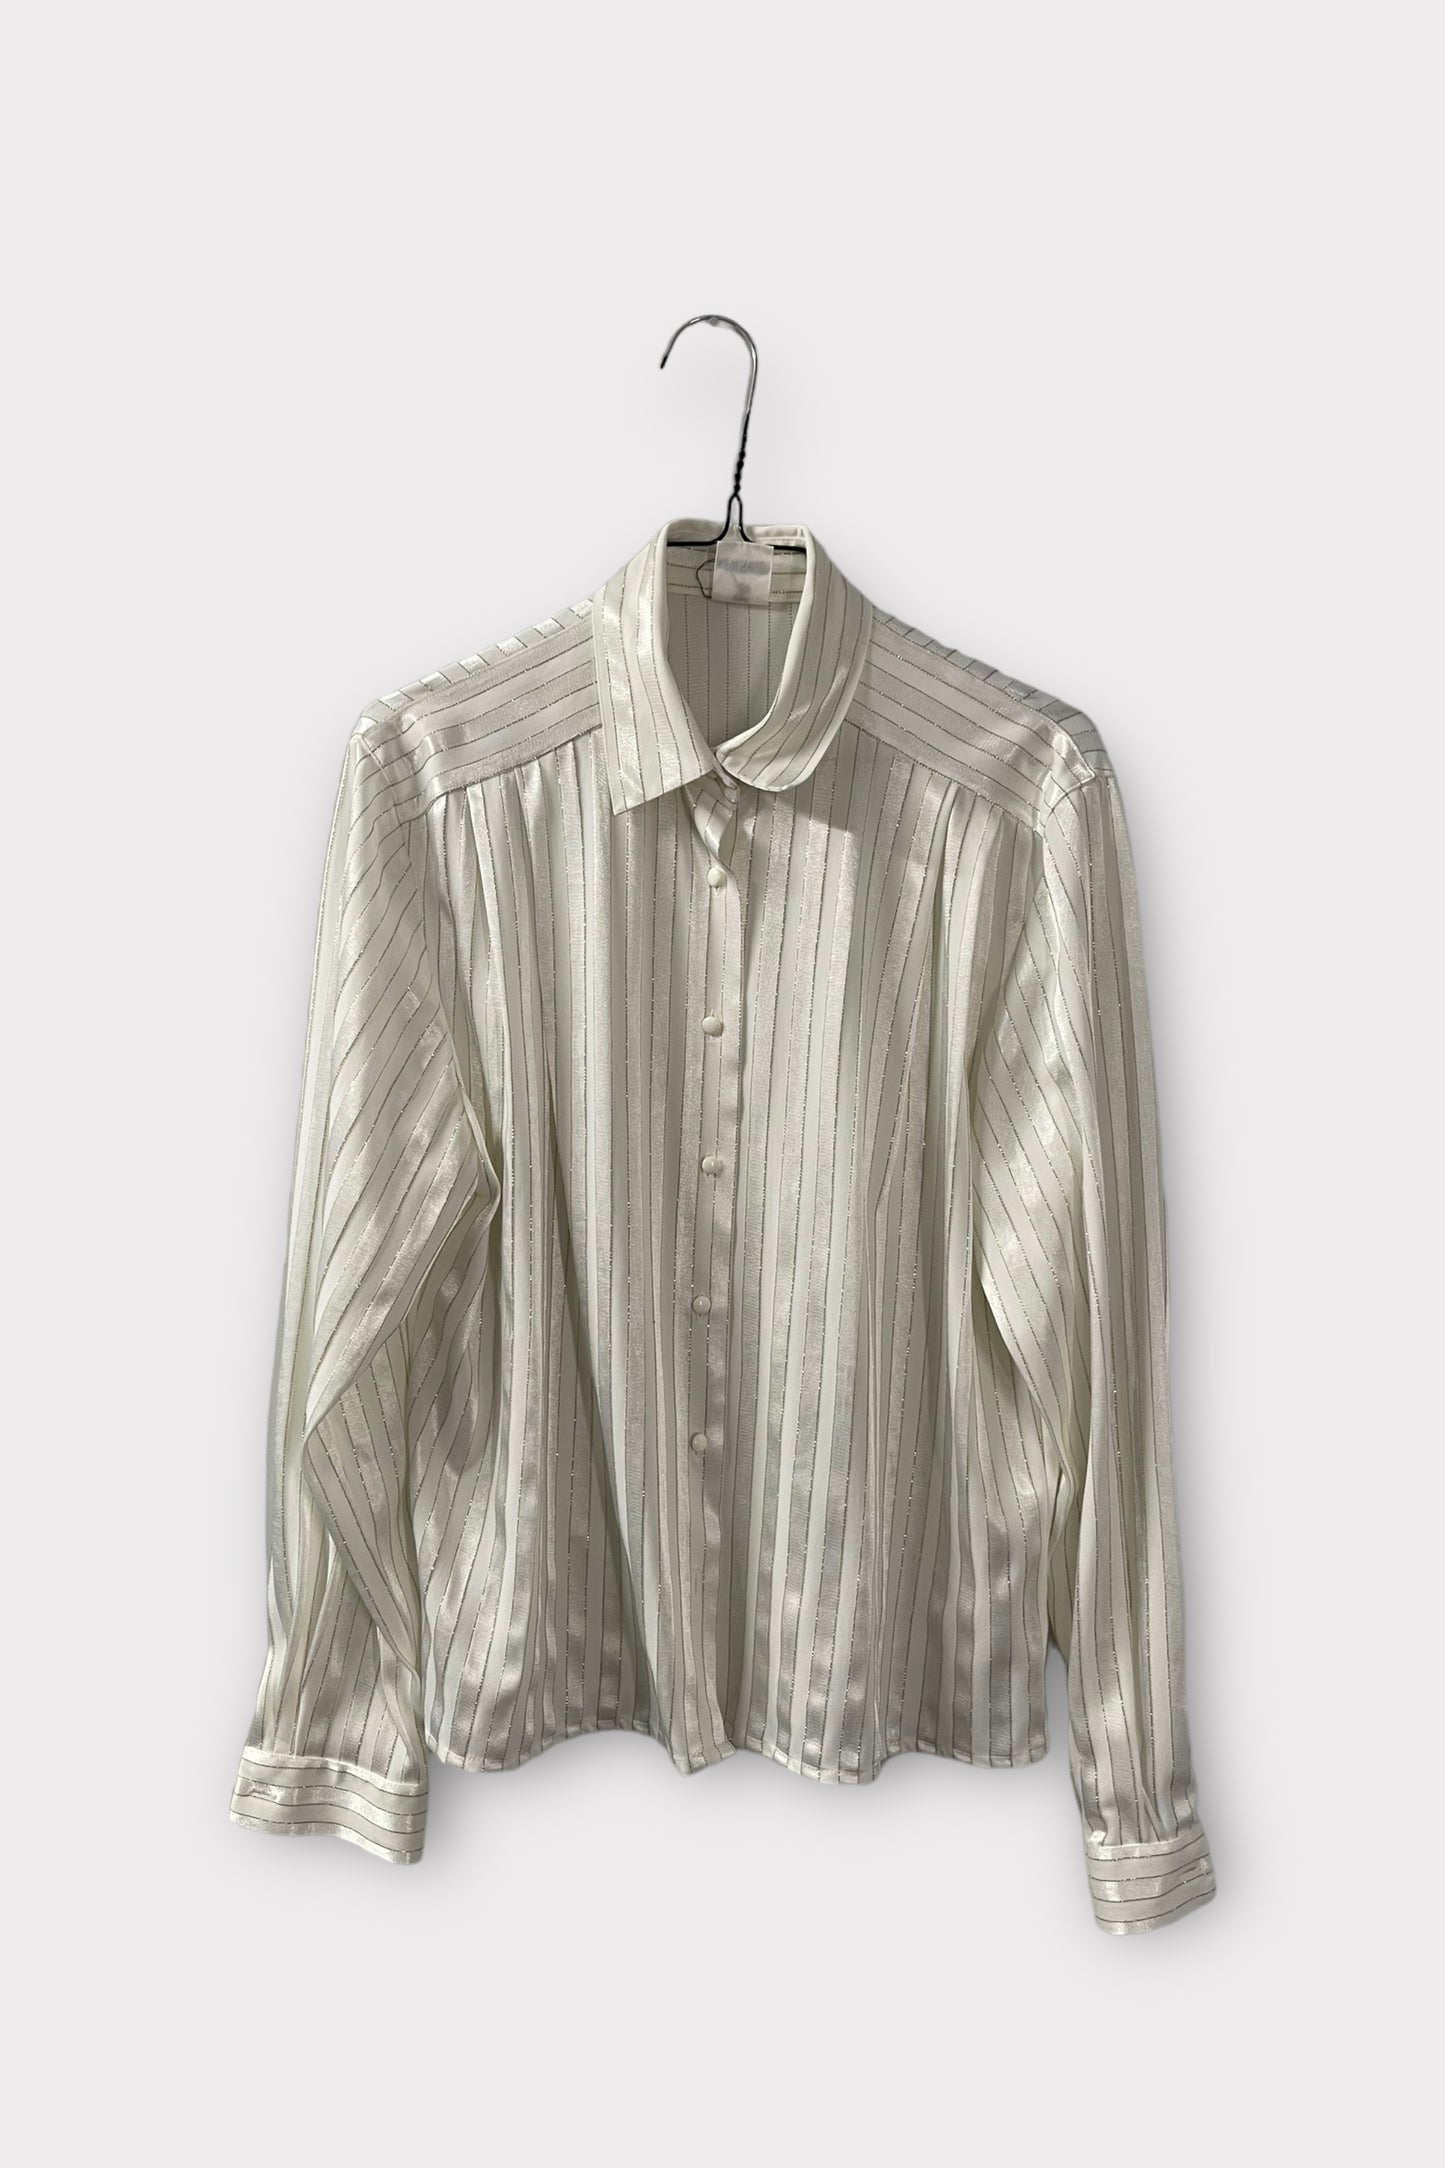 linda gold stripe blouse - M/L